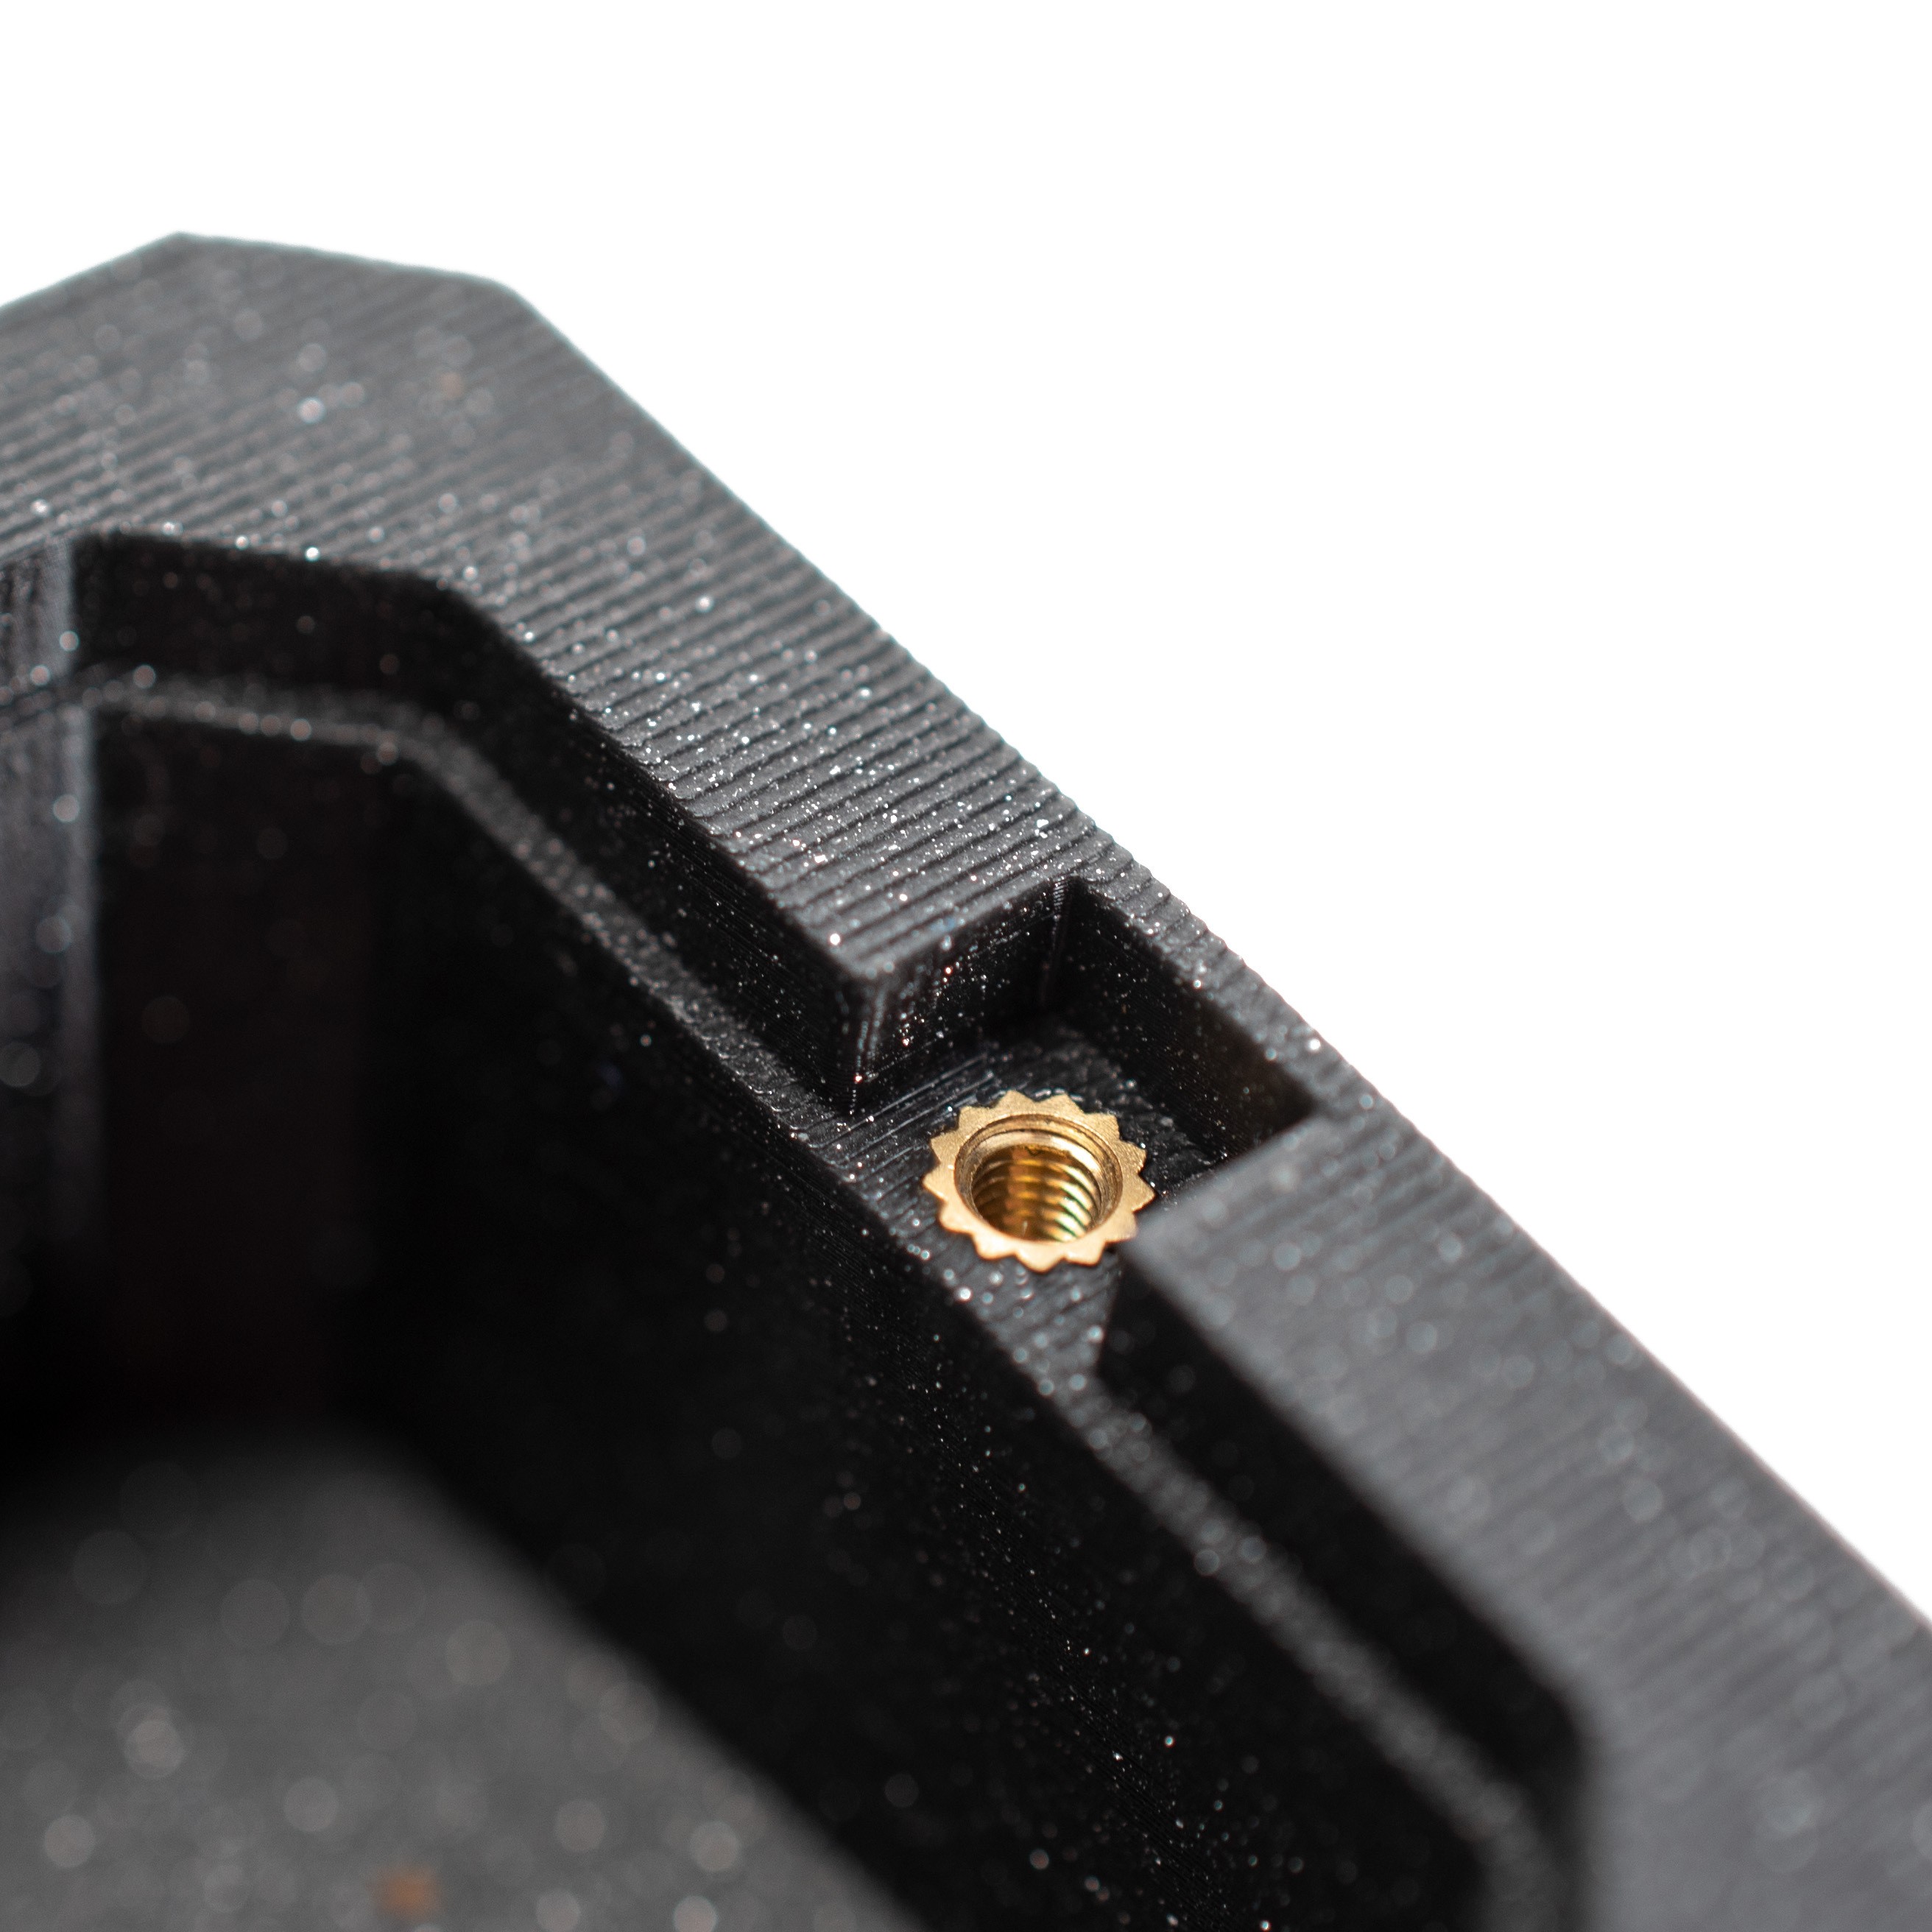 Litoexpe M4 Threaded Inserts, Brass Heat Set Insert Kit knurled Insert Nuts  for Plastic 3D Printing, Pack of 50